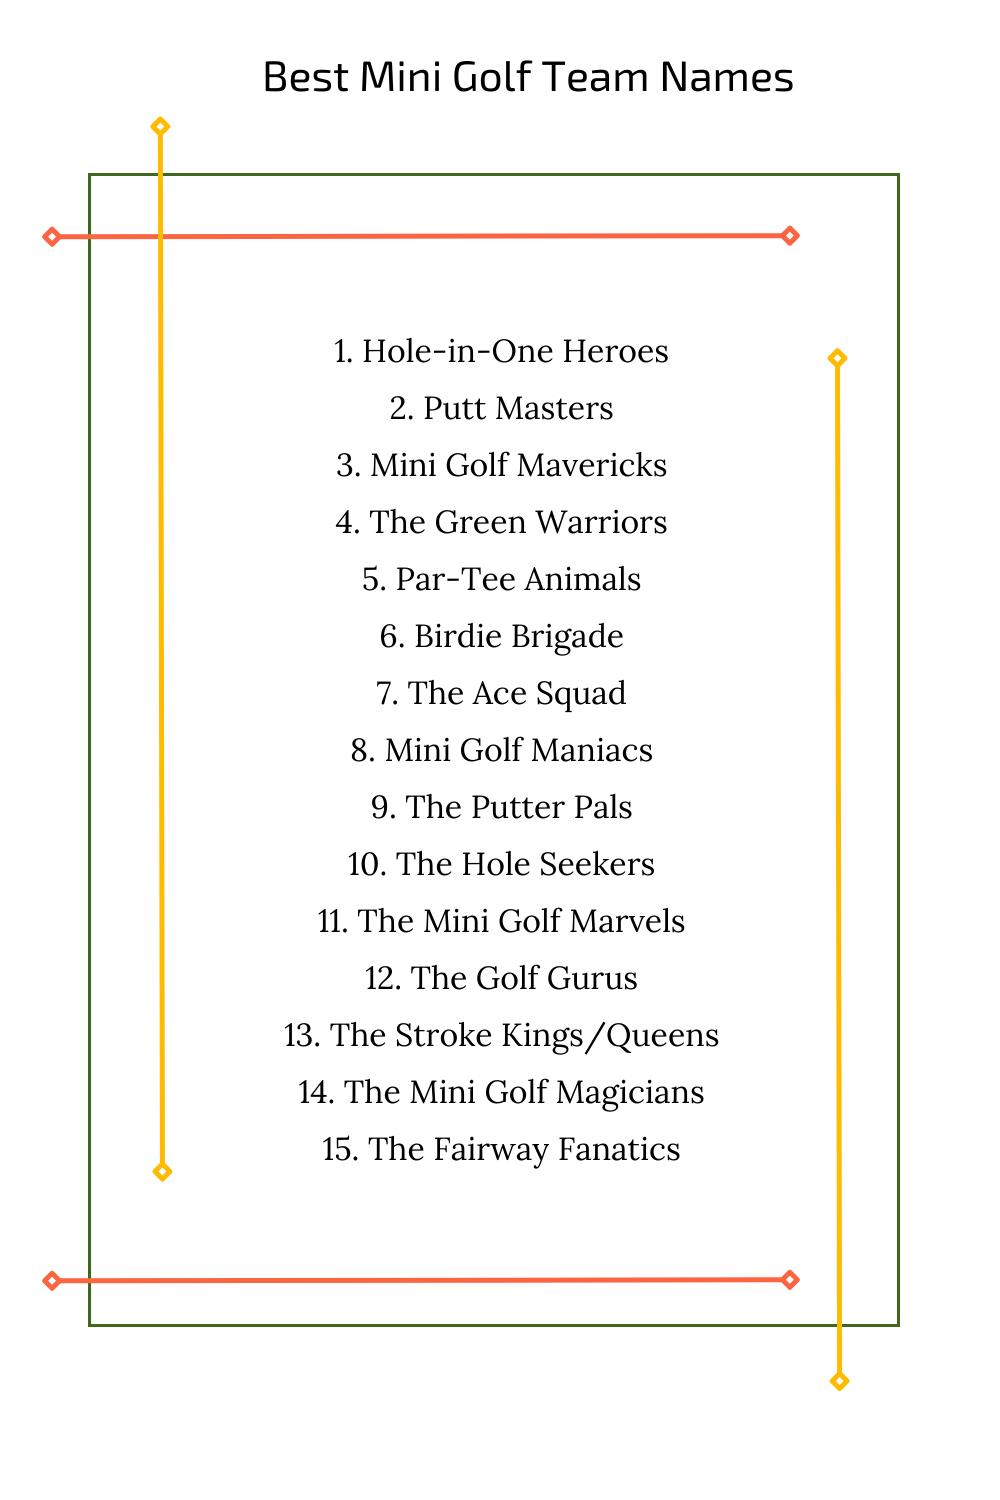 Best Mini Golf Team Names